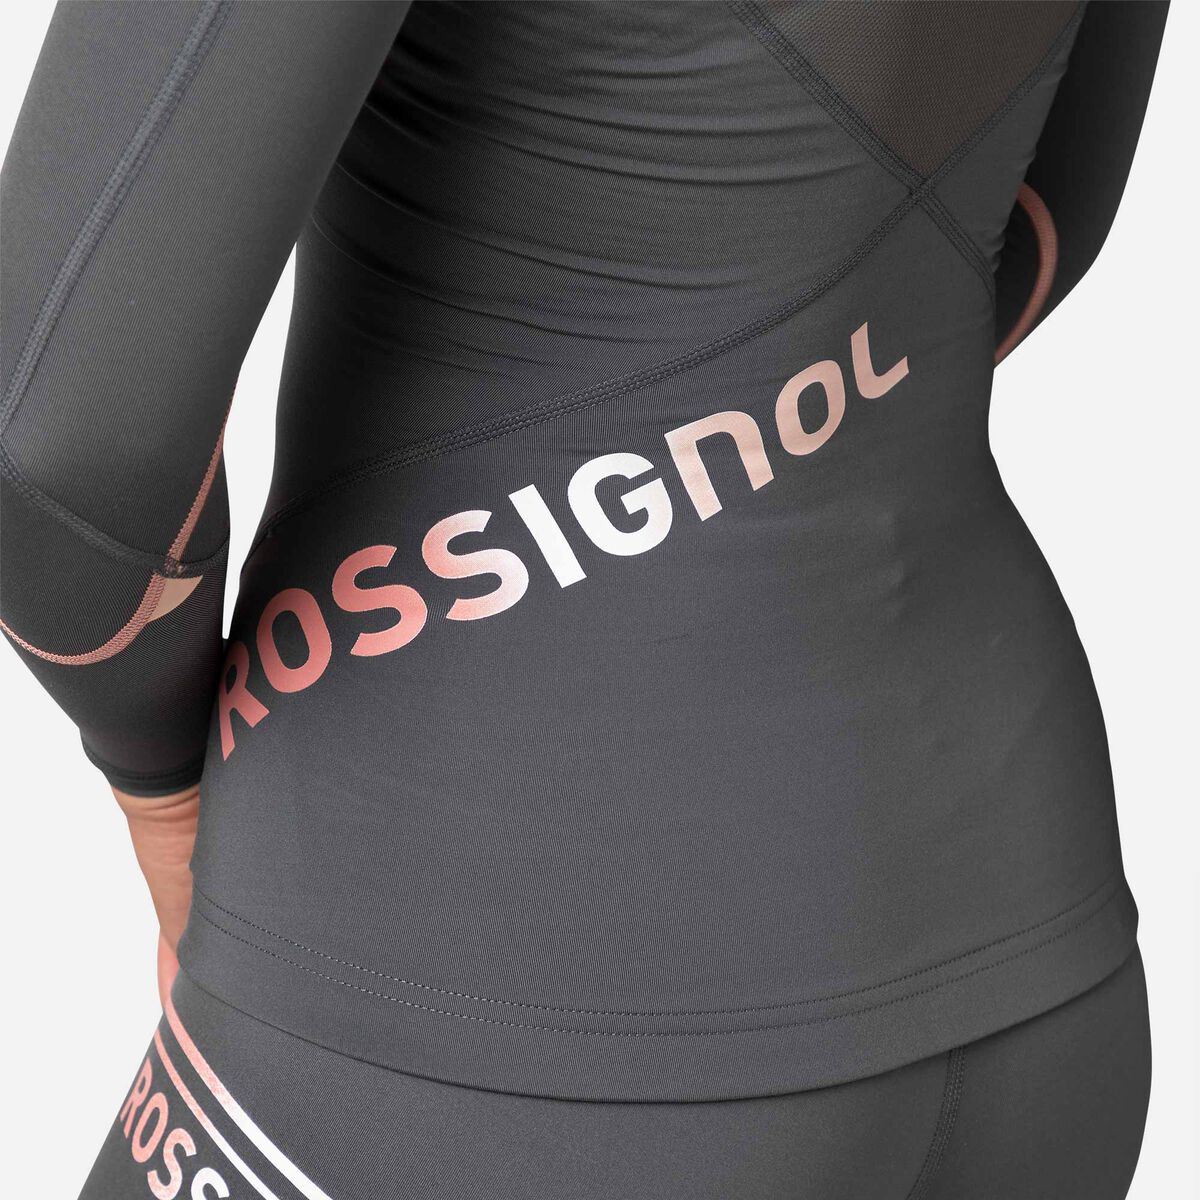 Rossignol Infini Compression Race Top - Cross-Country Ski Jacket Women's, Buy online